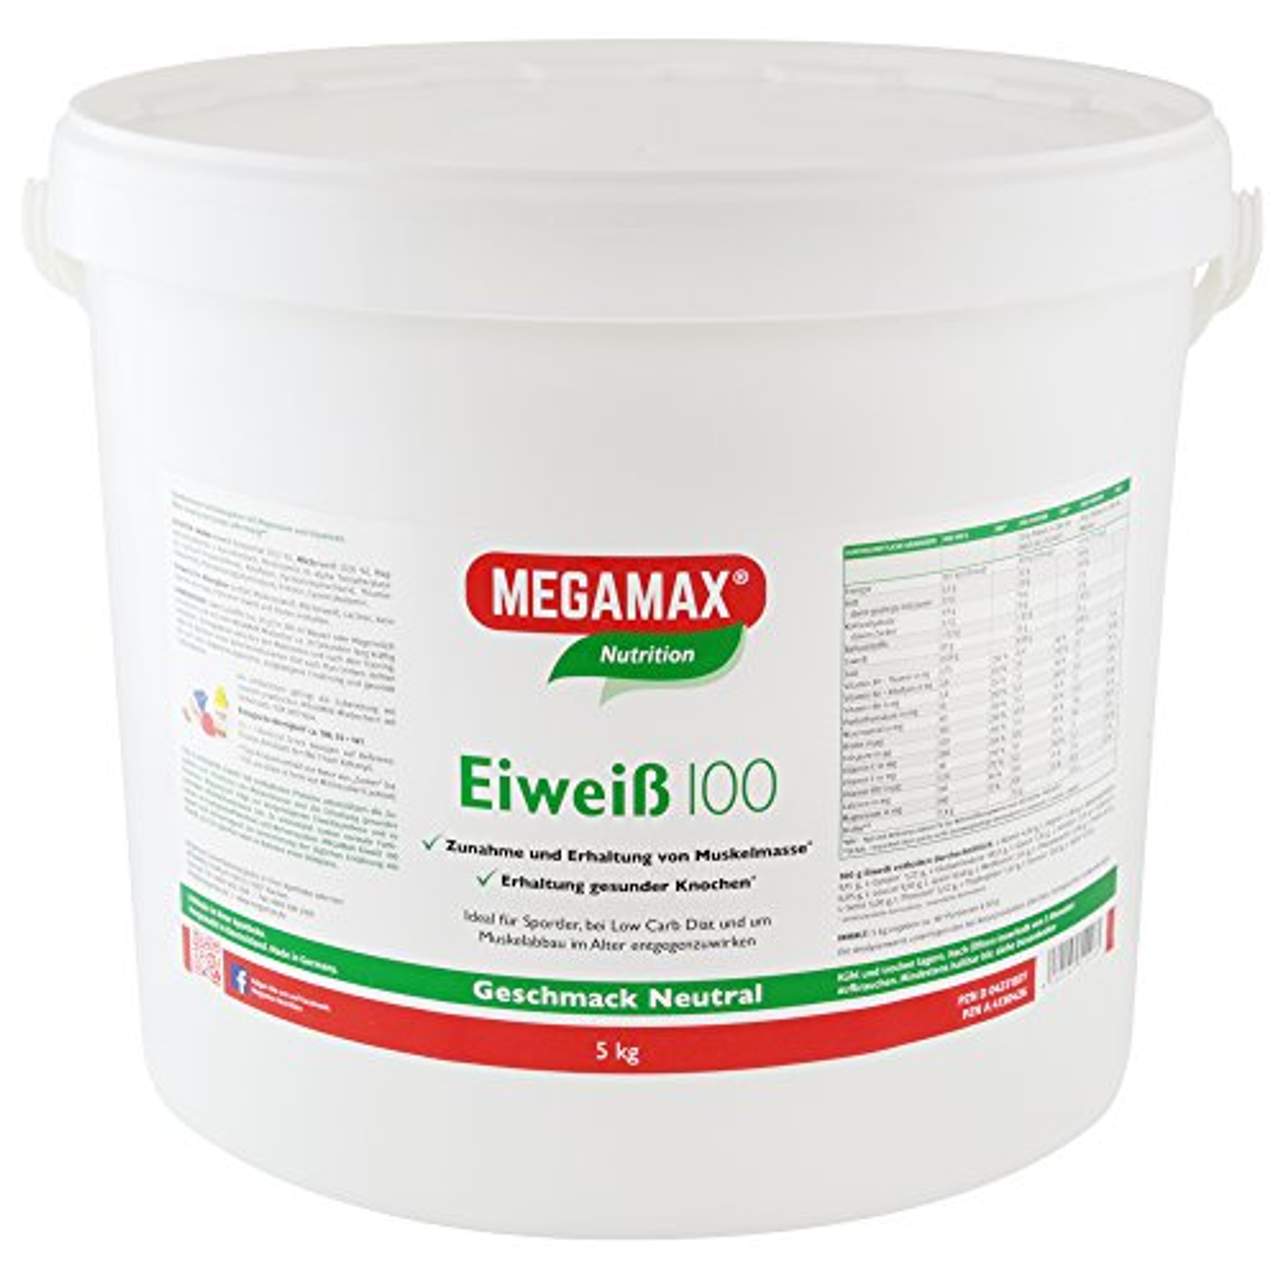 Megamax Eiweiss Neutral 5 kg